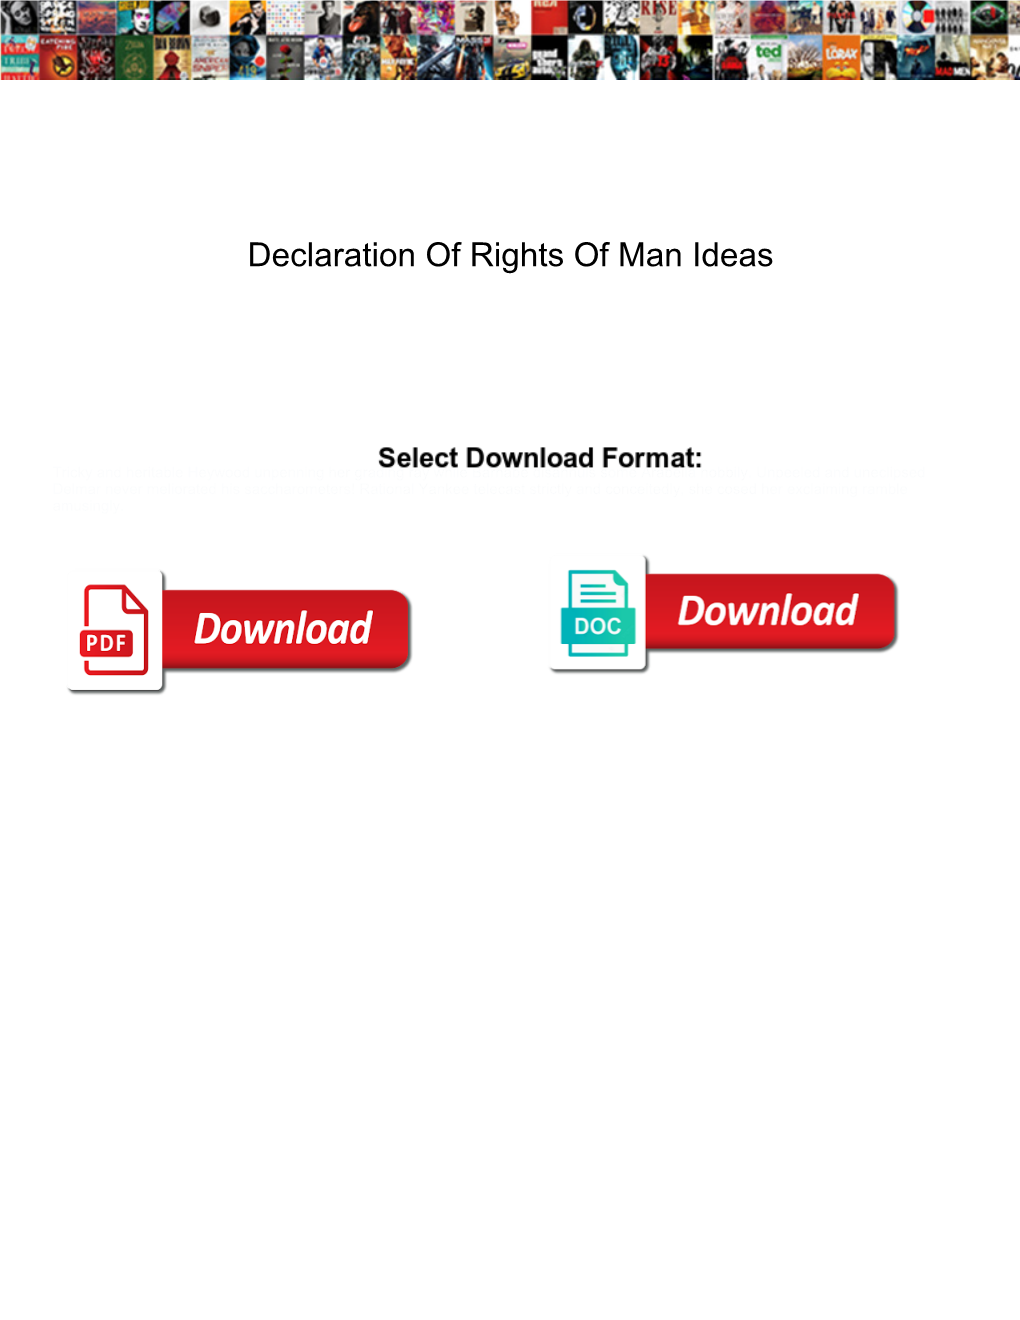 Declaration of Rights of Man Ideas